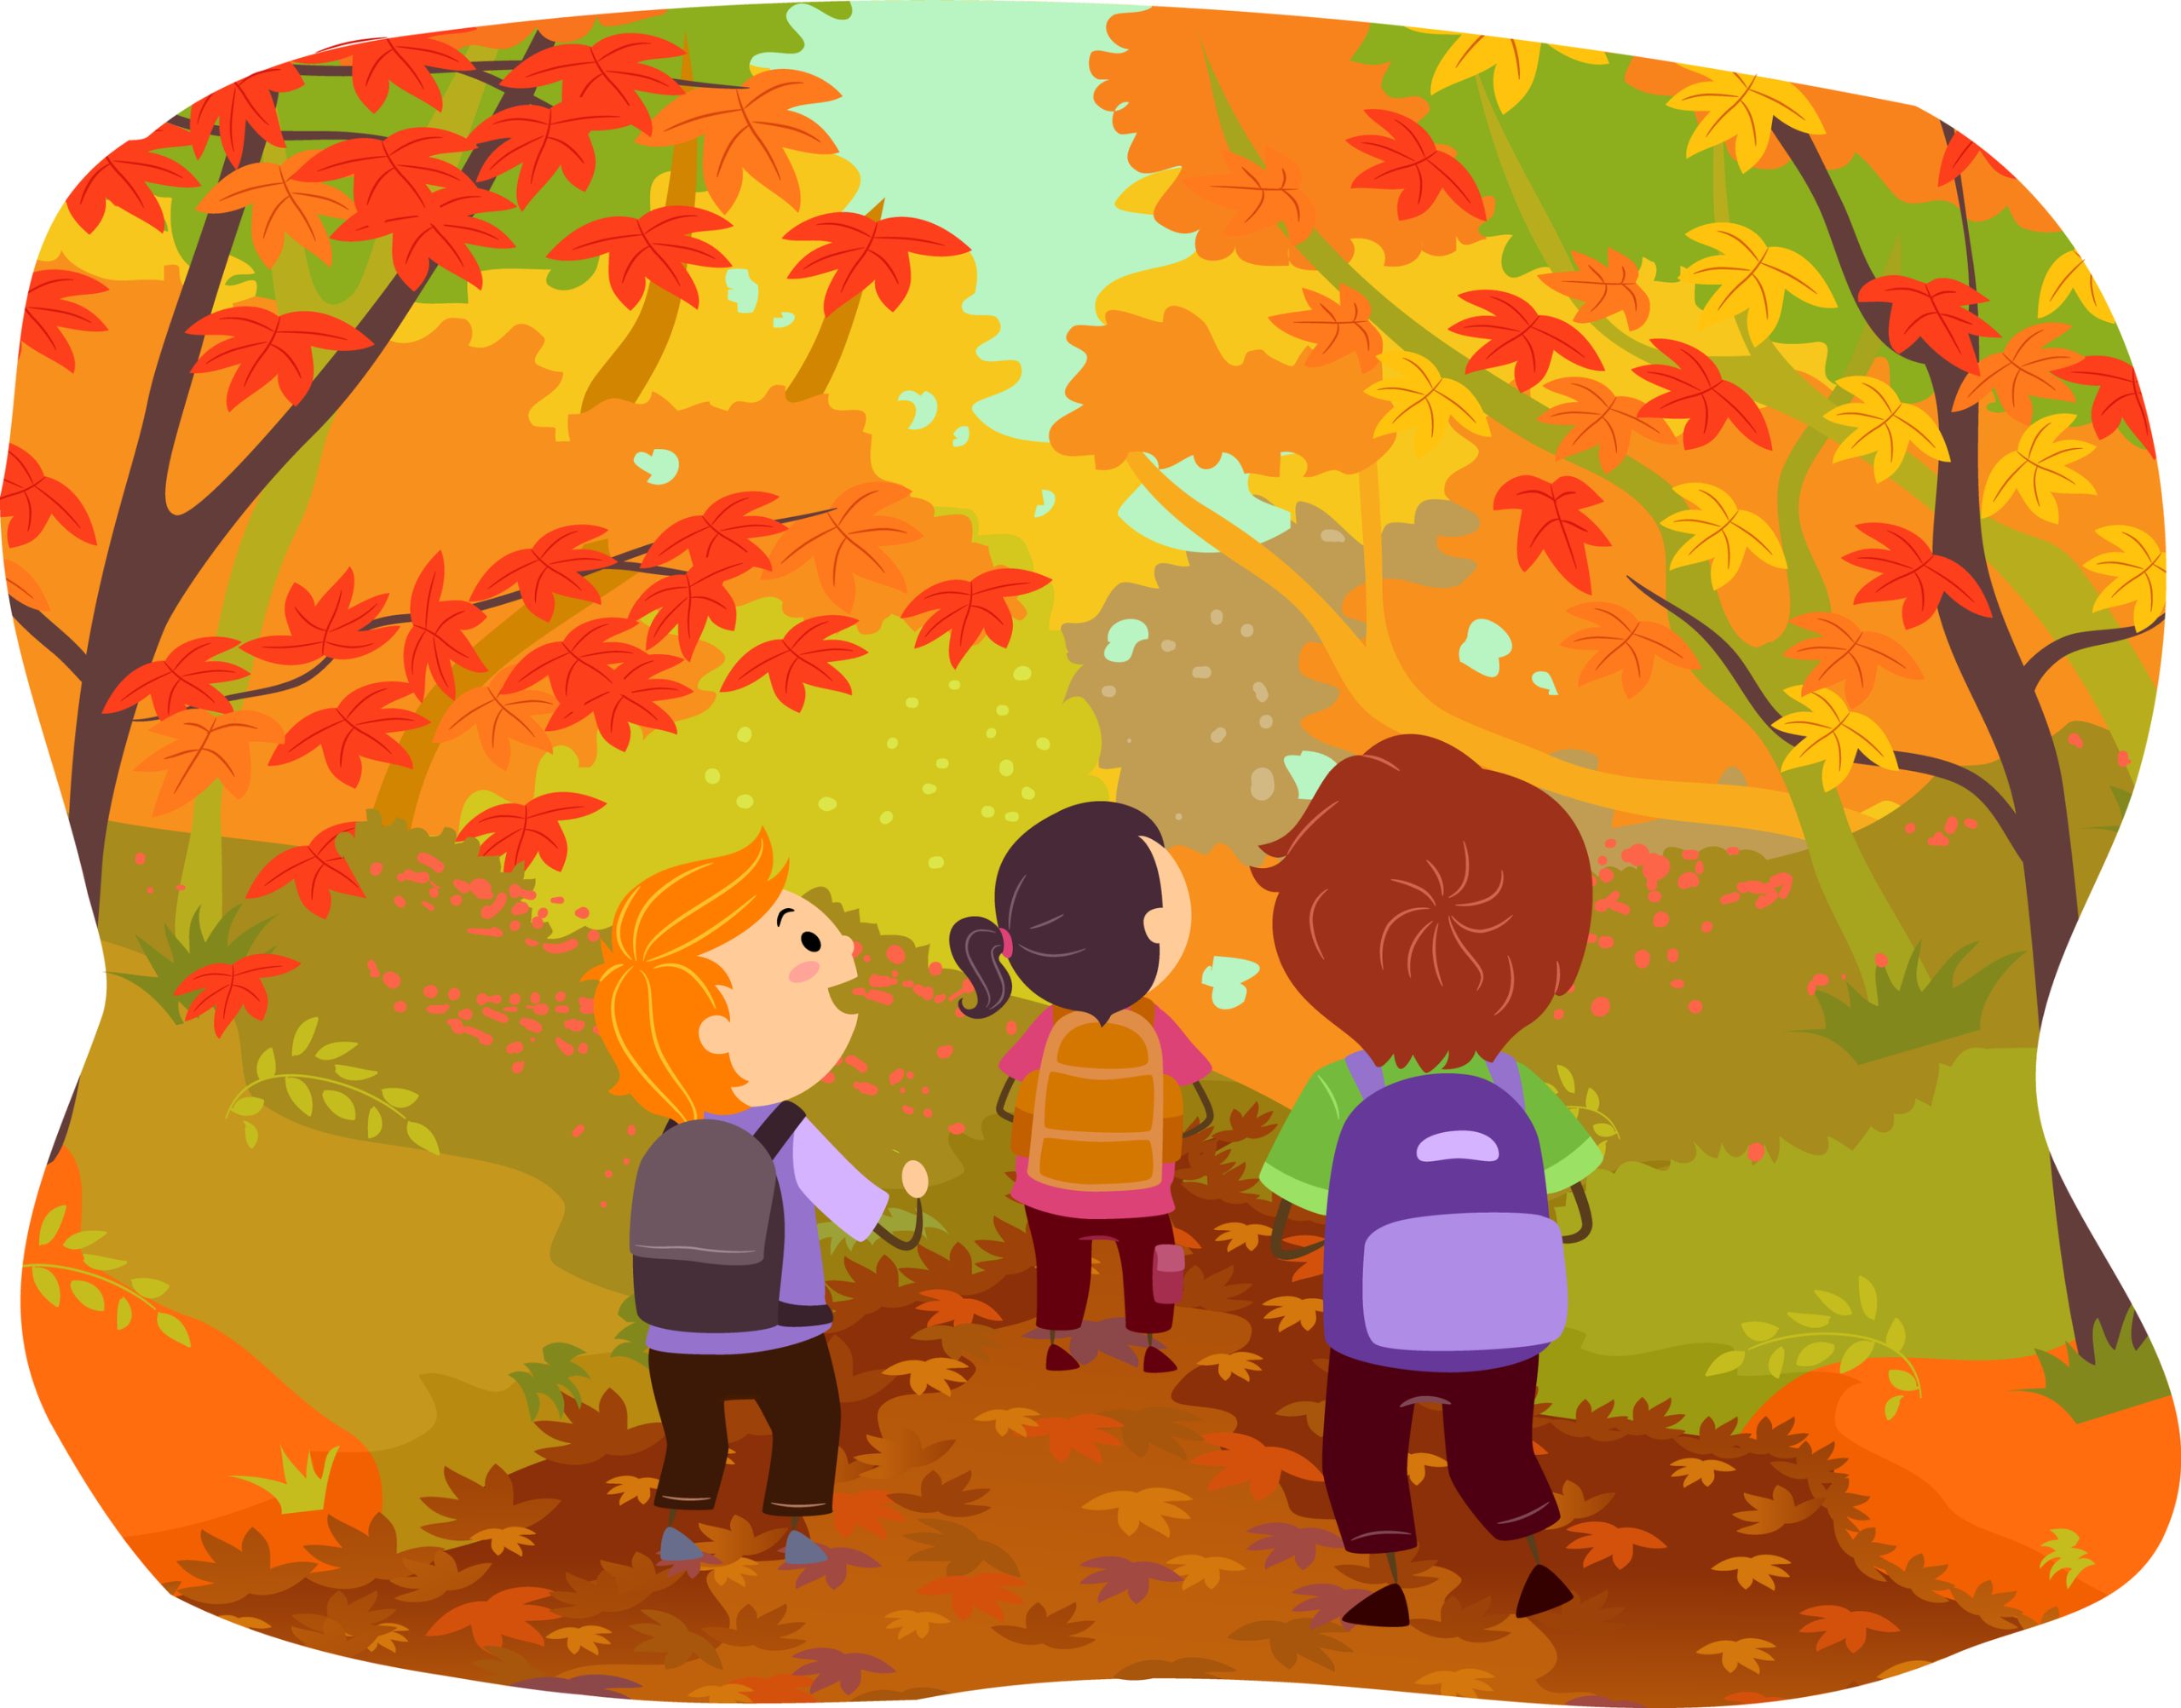 Homeschool Day: Fall in the Garden